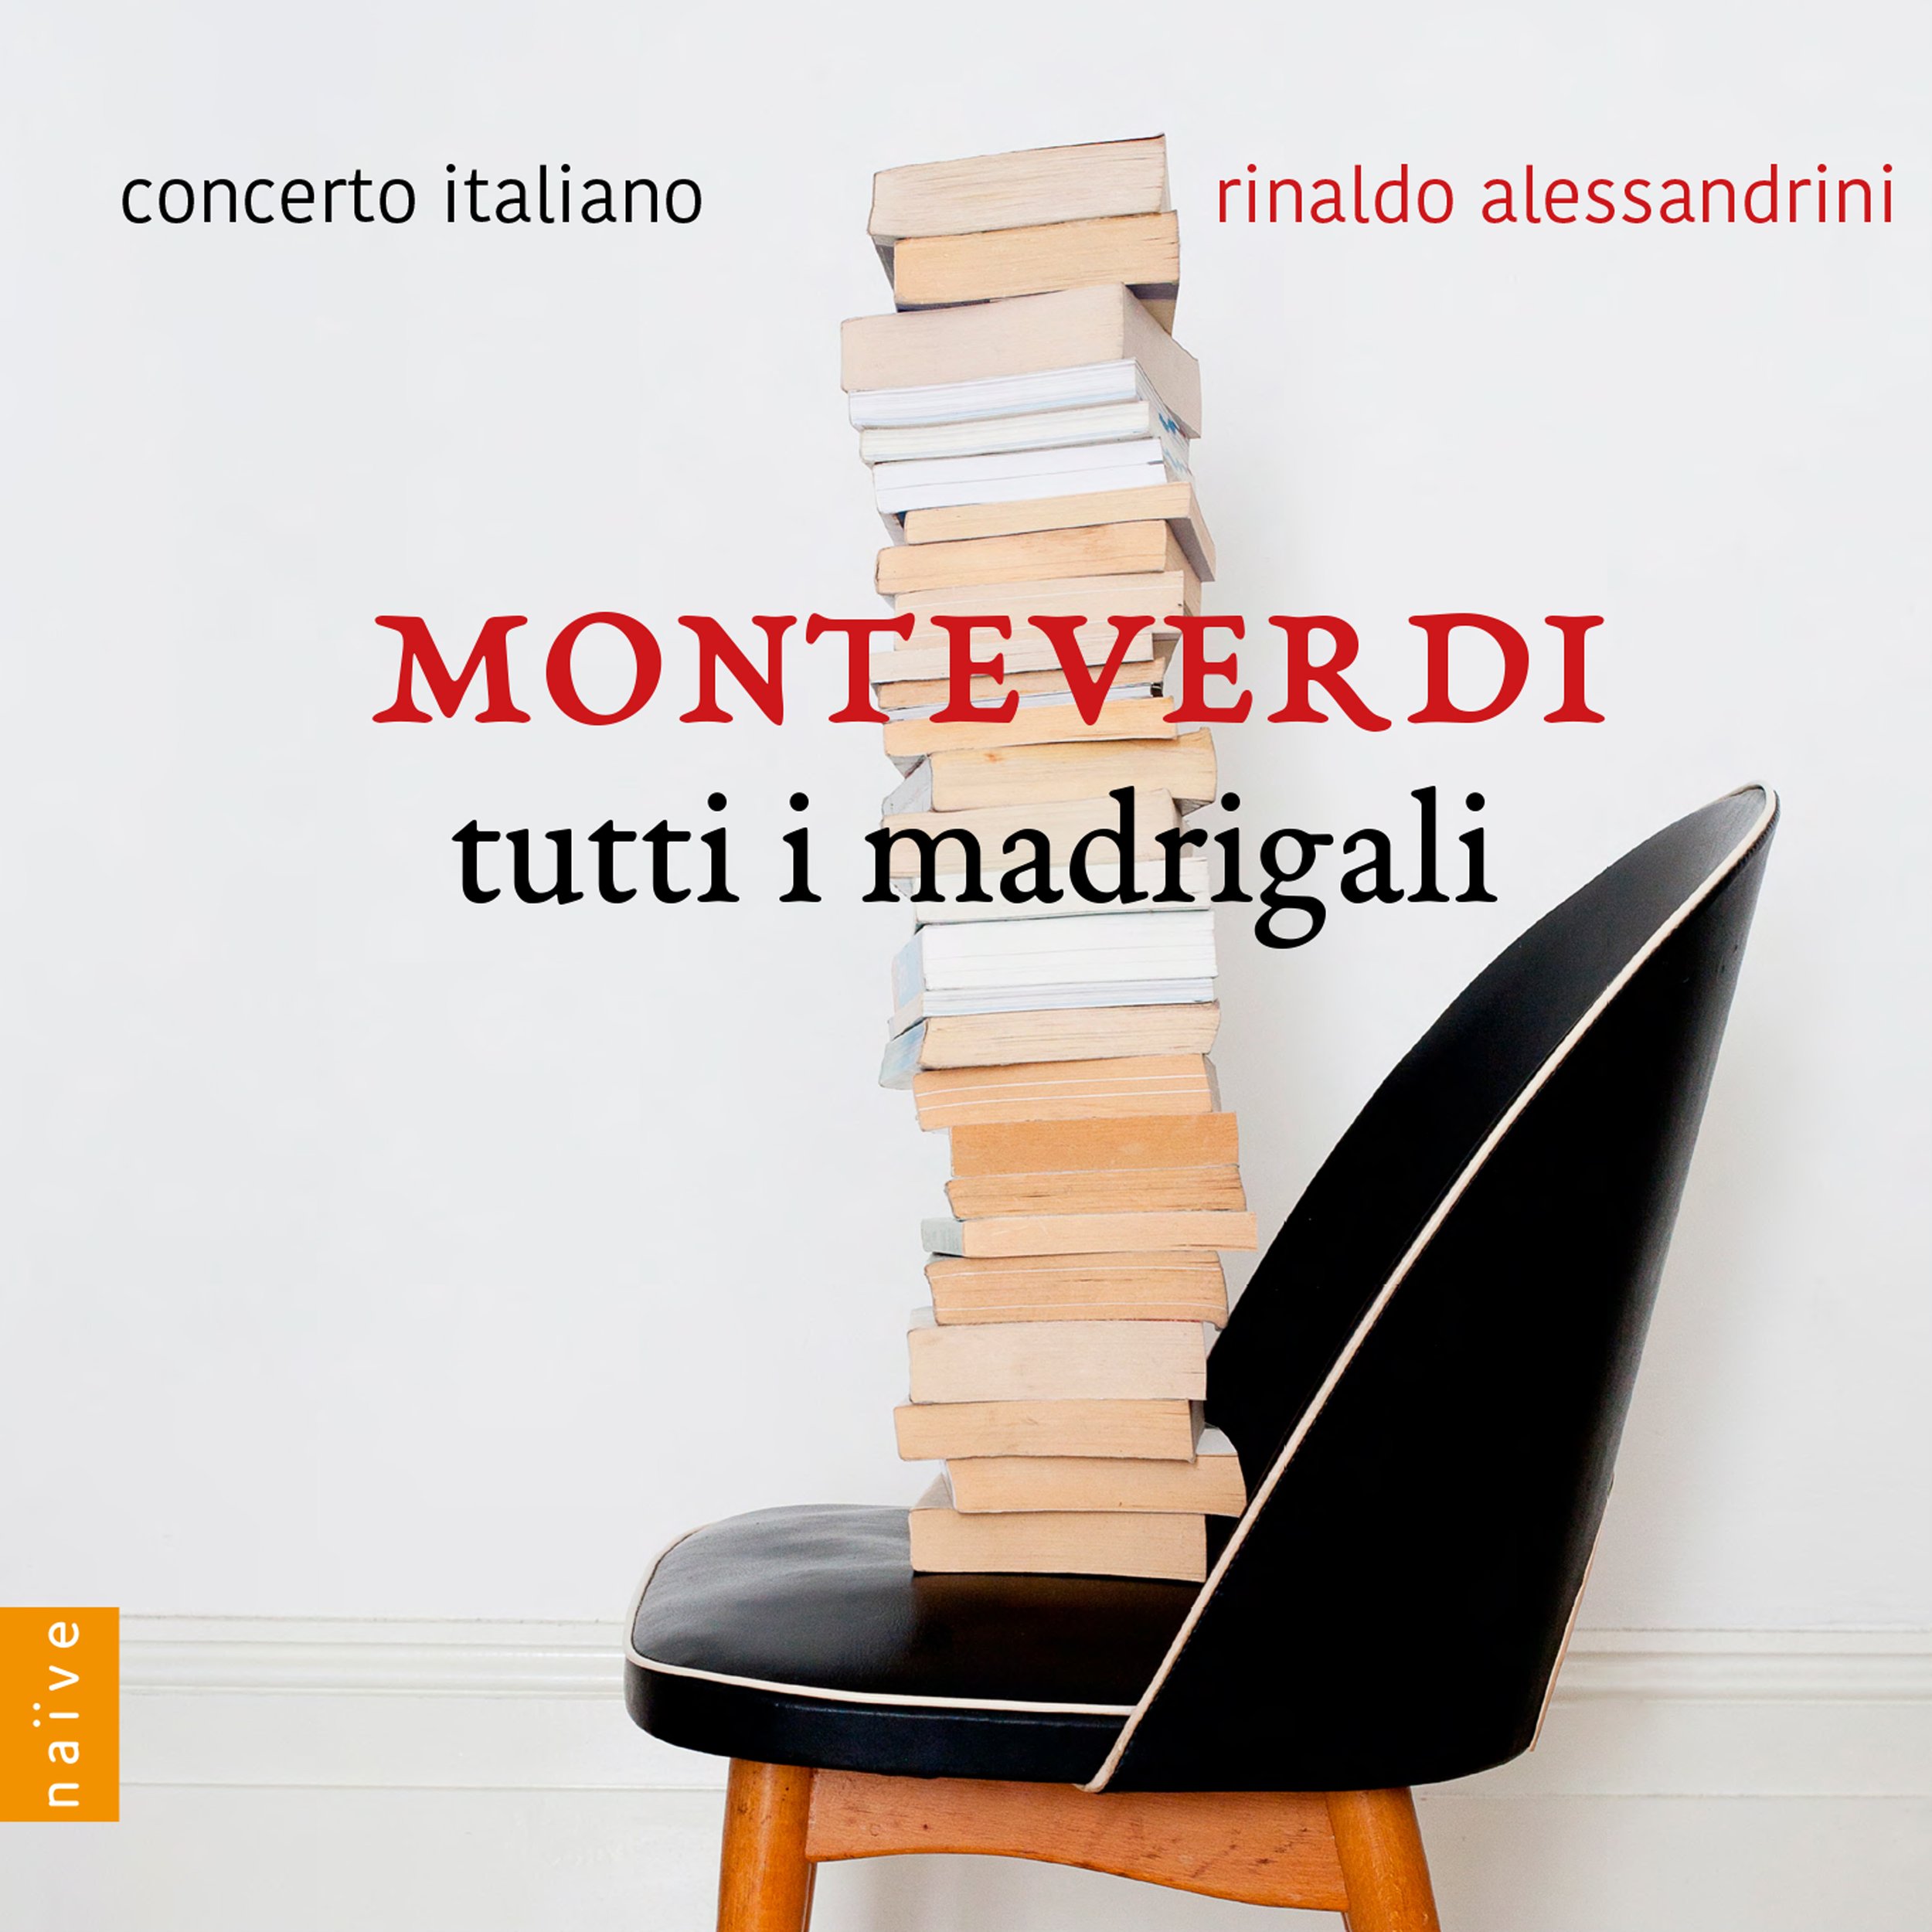 OP7547 K alessandrini concerto italiano tutti i madrigali 3000 (1).jpg